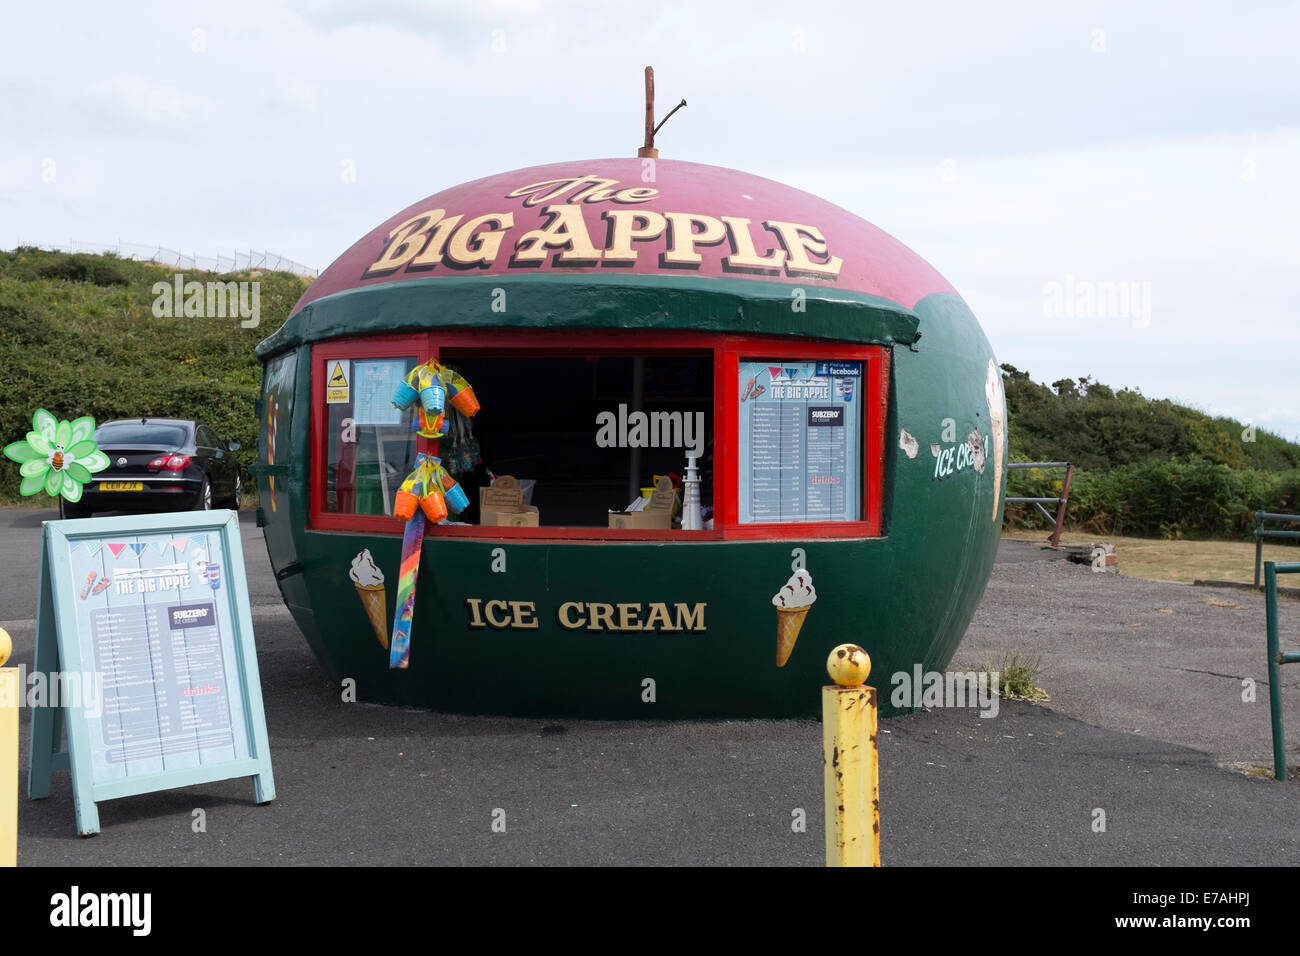 The Big Apple New York Ice Cream Booth Shop Stall Stock Photo